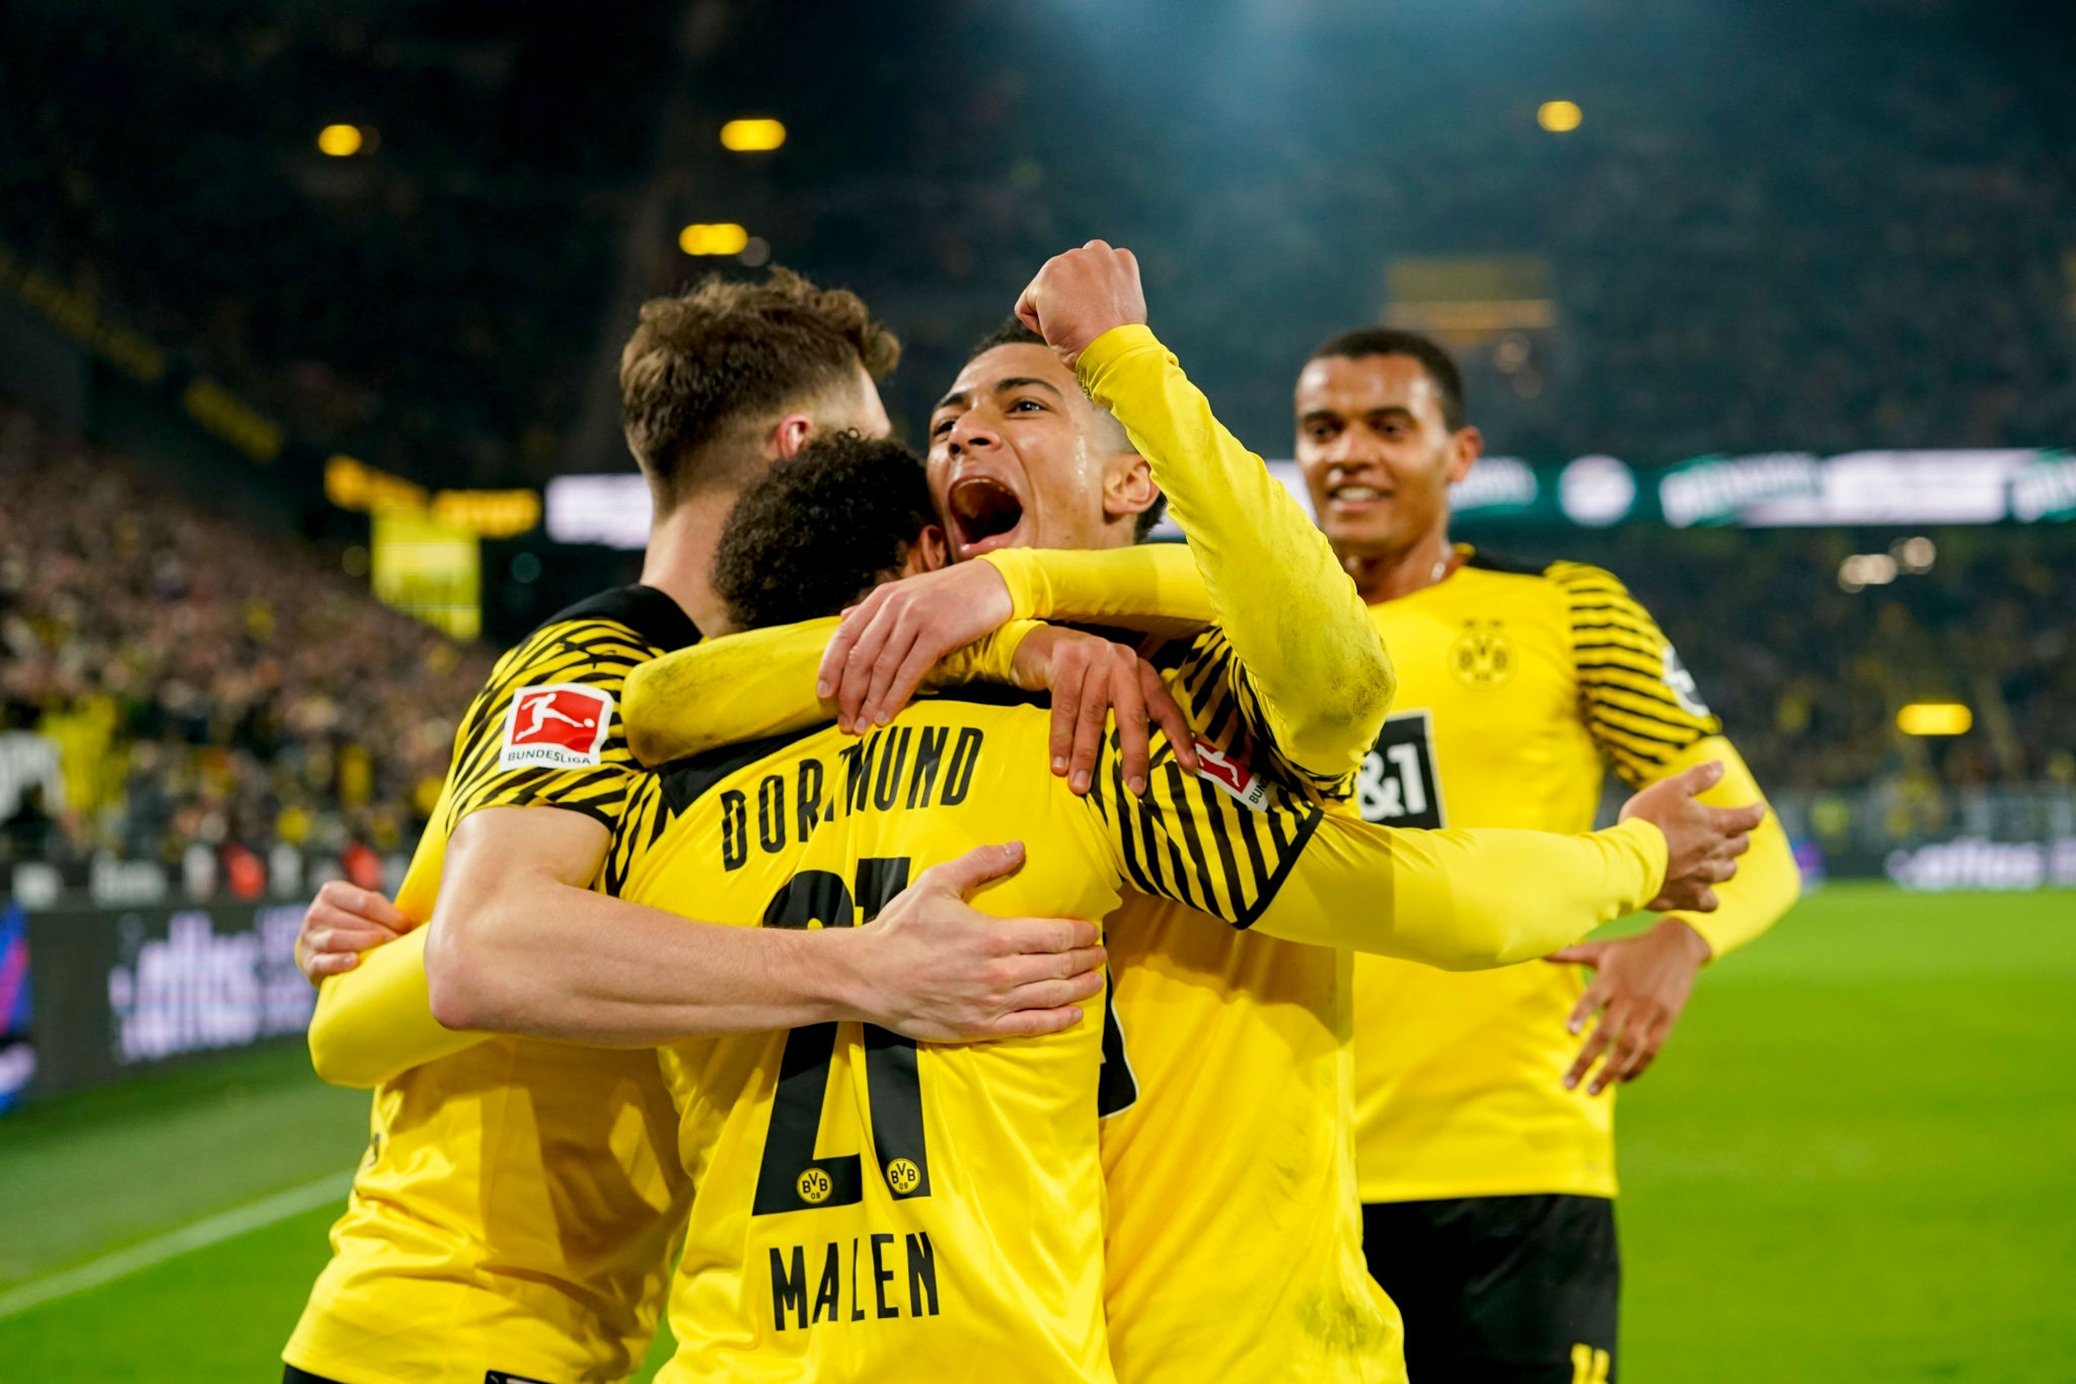 Marco Reus scores late to seal 2-1 win for Borussia Dortmund | Bundesliga